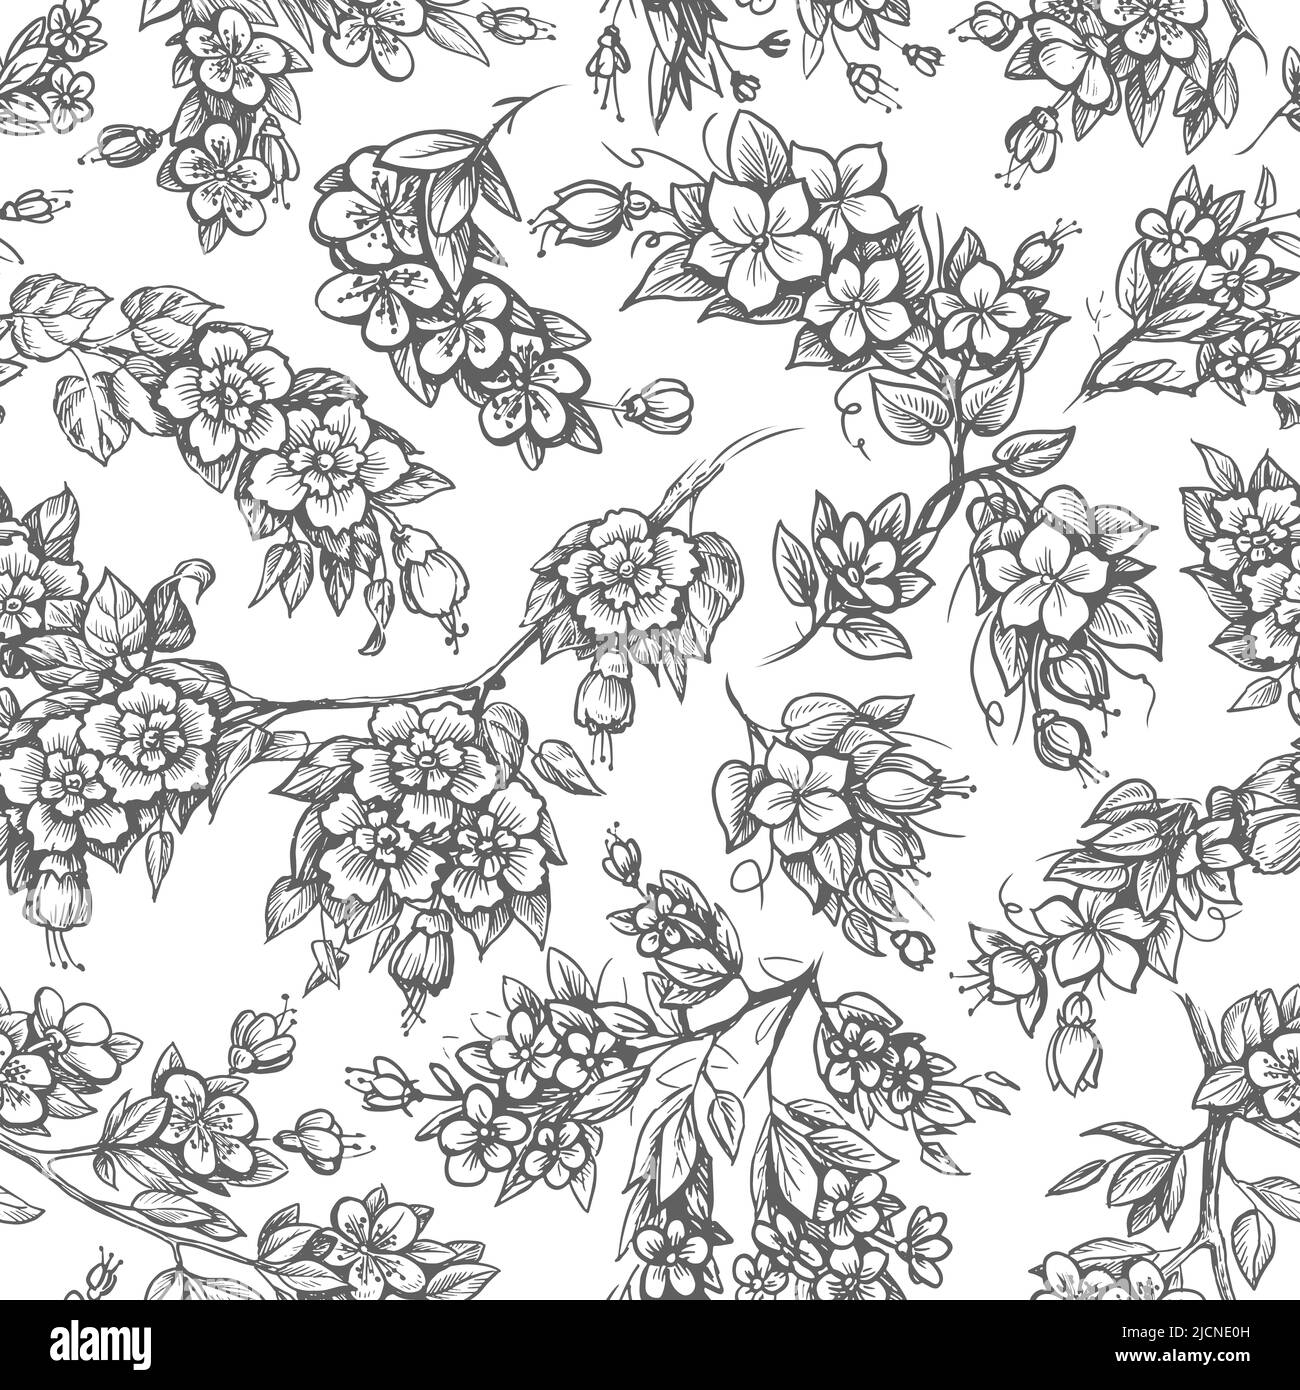 Floral seamless pattern. Flowers background drawn in vintage engraving ...